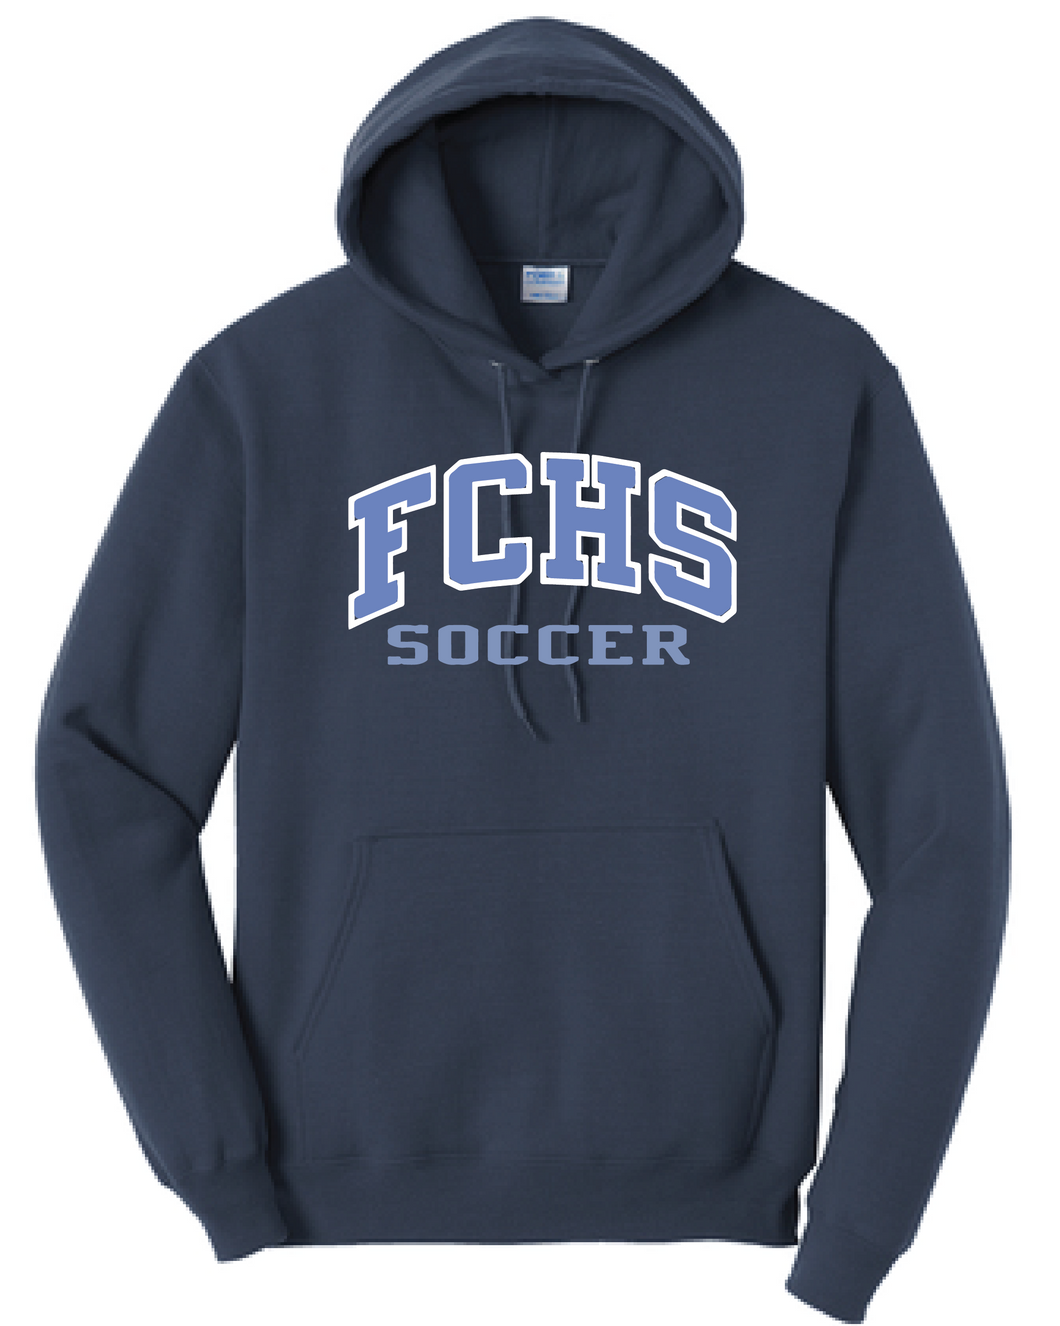 Stitch Embroidered Fleece Hooded Sweatshirt (FCHS Soccer) / Navy Blue / FC Soccer